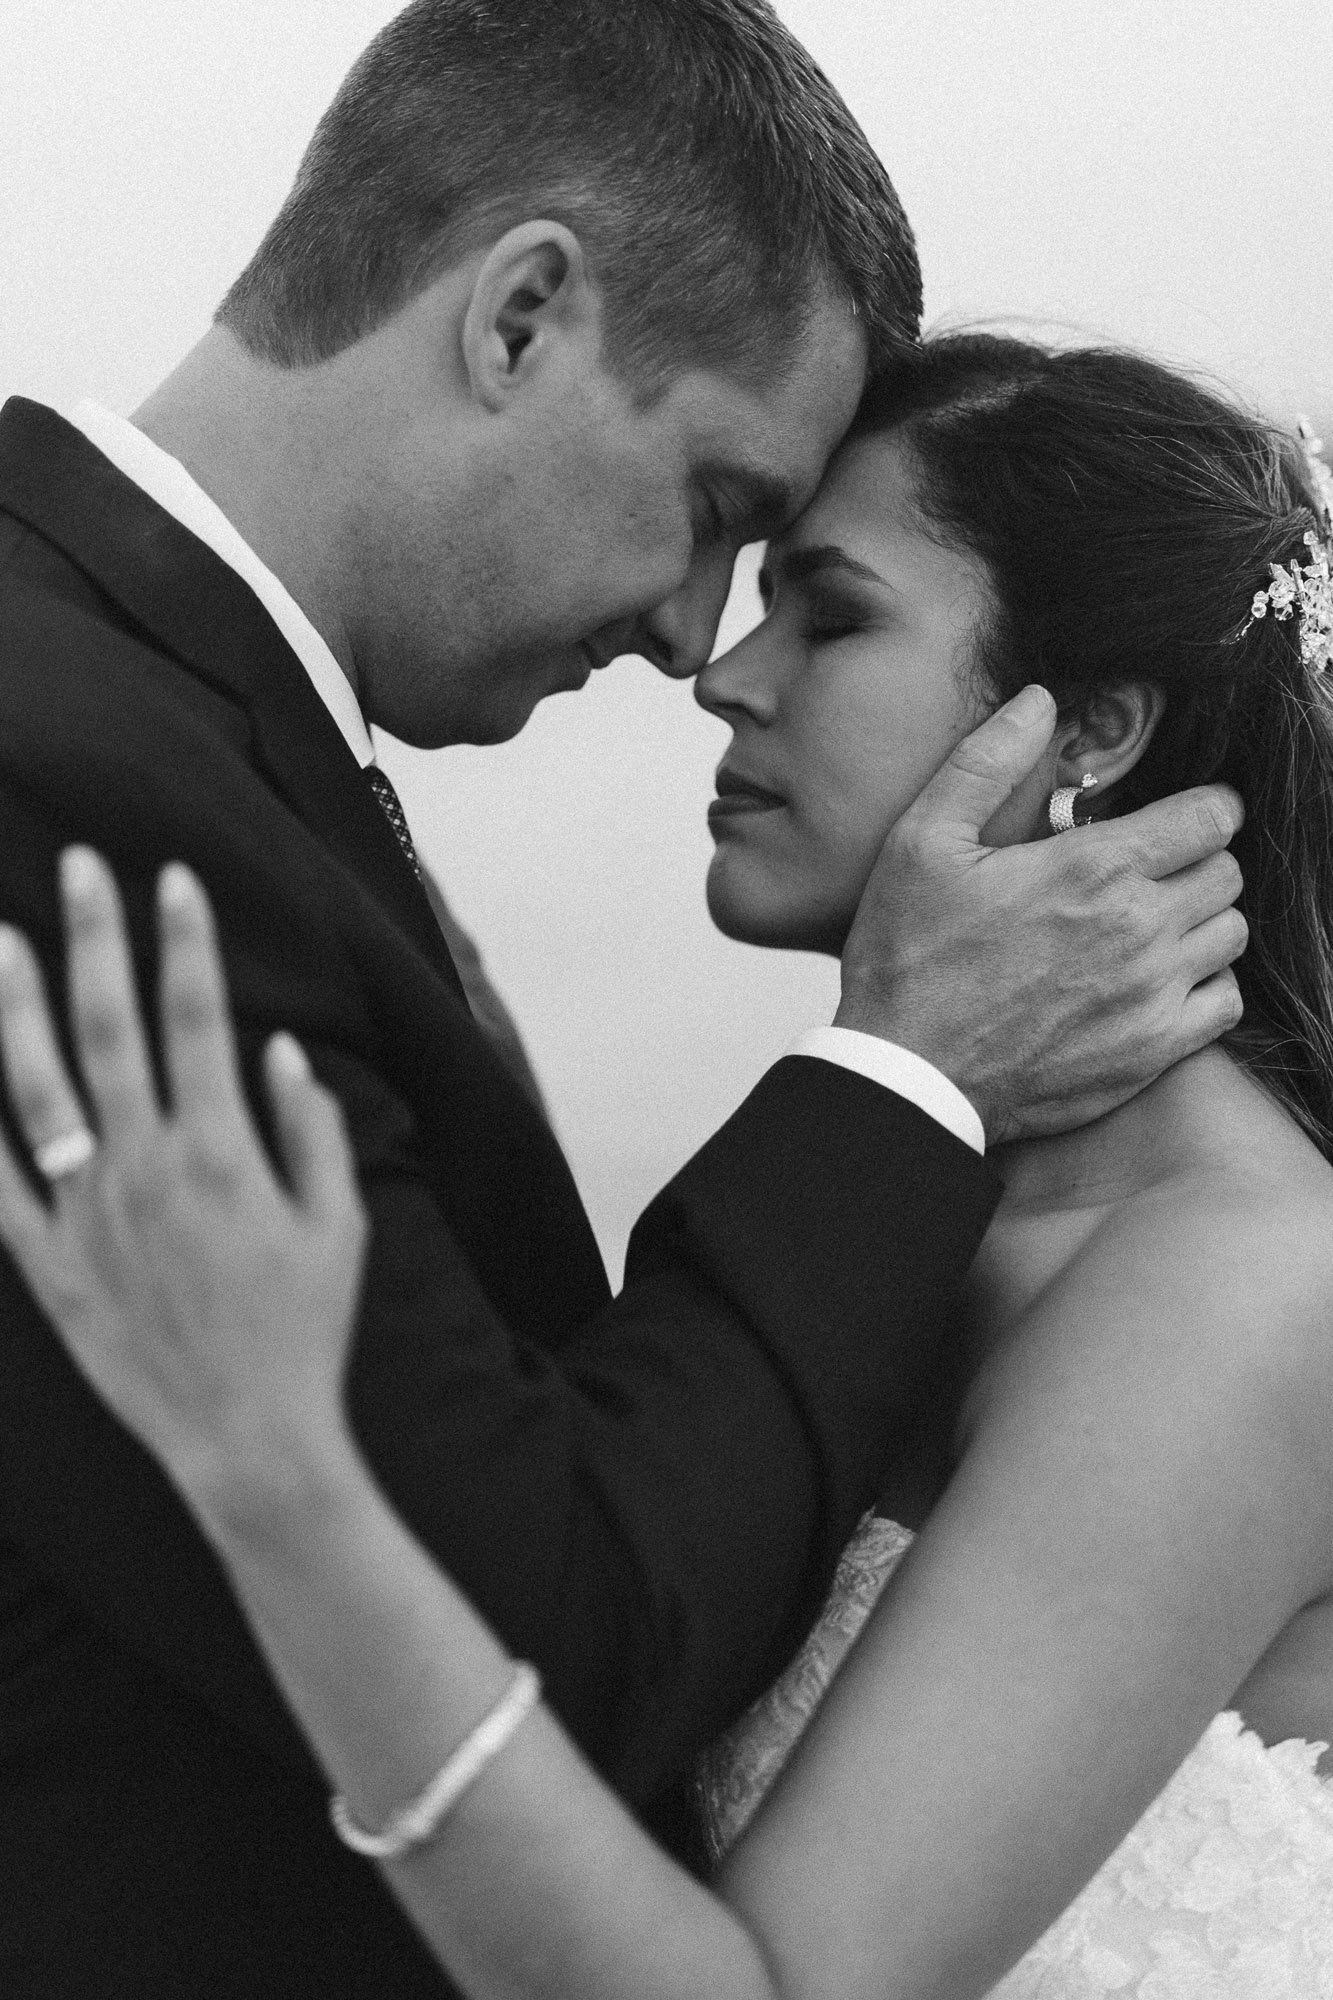 bride-groom-eyes-closed-embracing-monochrome-couples-photographer-autumn-skye-phoenix-boston.jpg